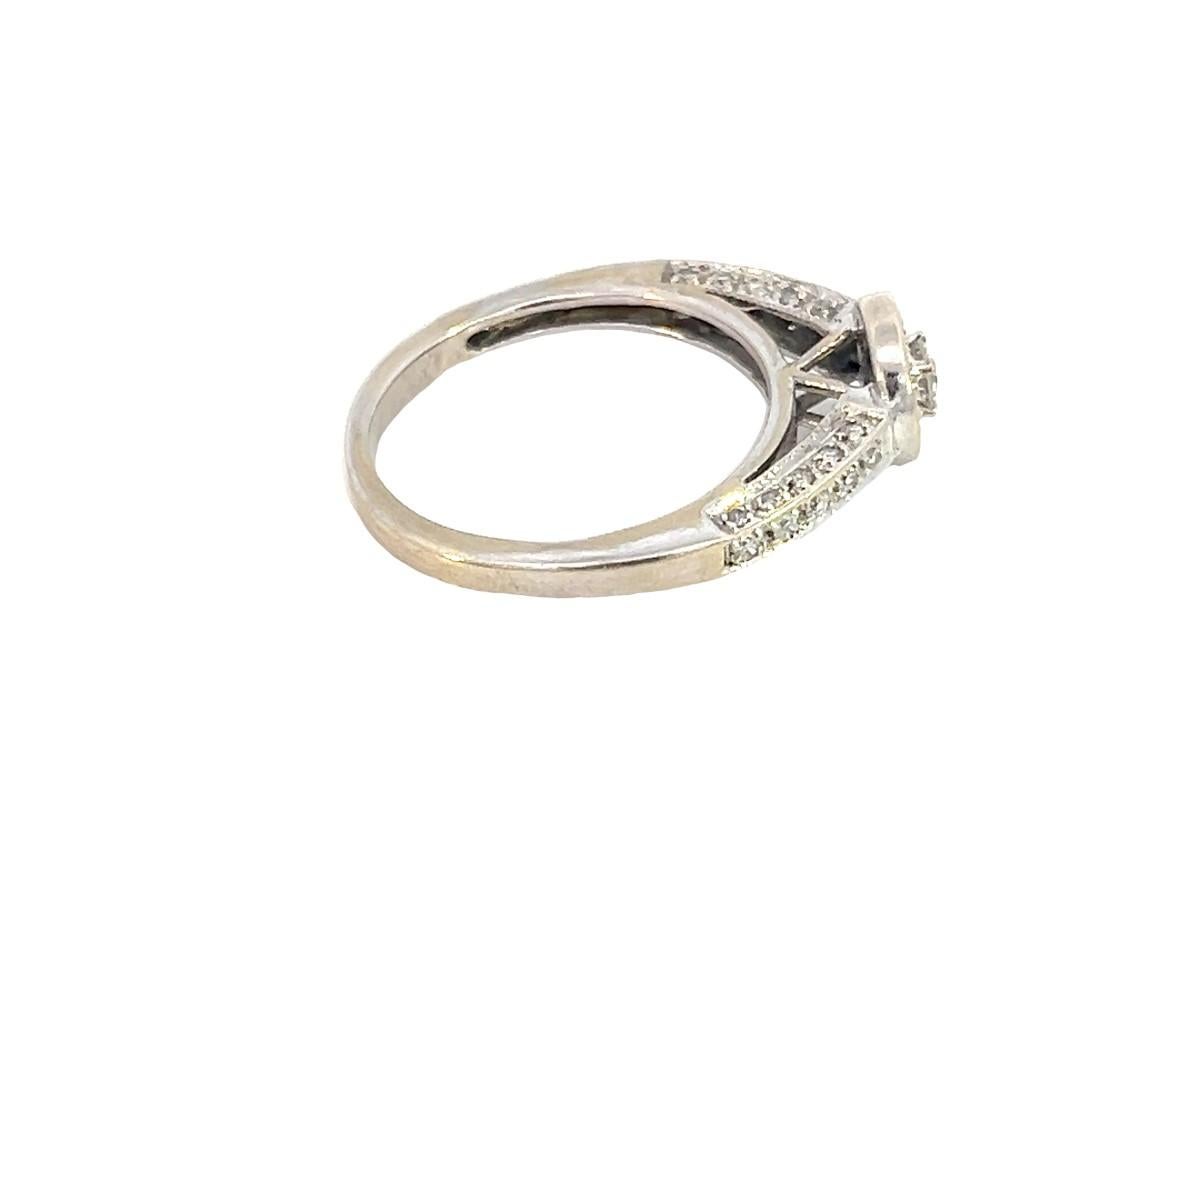 Brilliant Cut 14K White Gold apx 49/100 ctw Diamond Engagement Ring 3.69g sz:7.5 For Sale